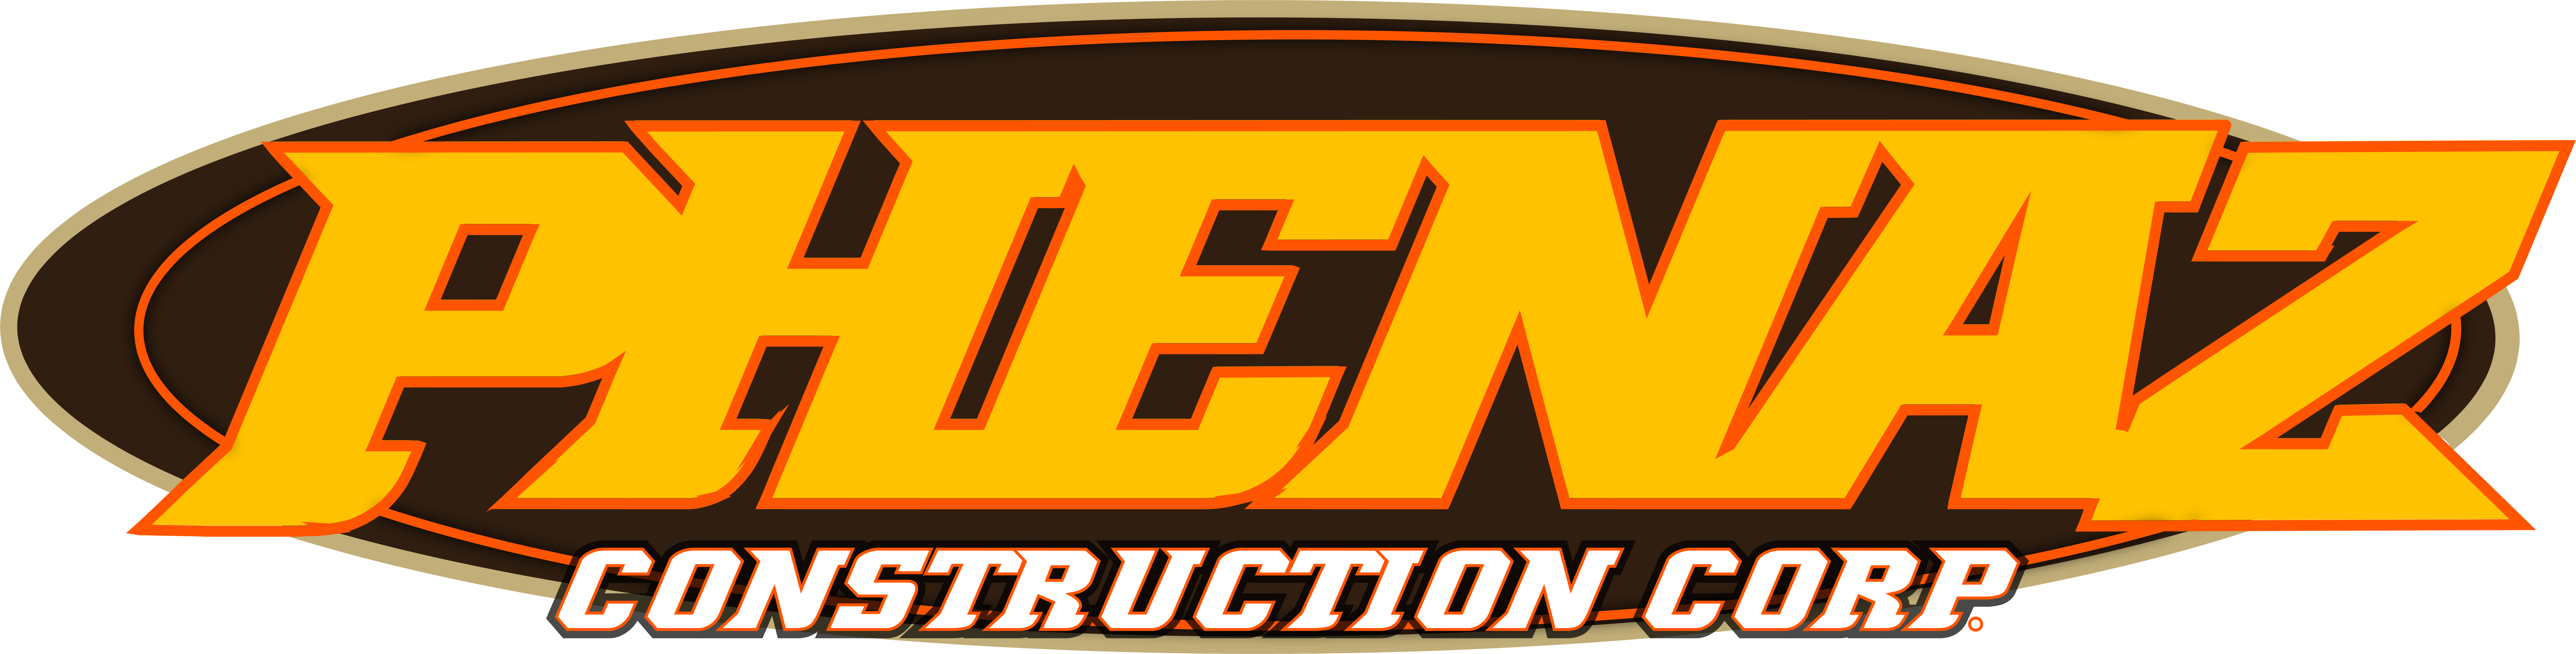 Phenaz Construction Corp. Logo